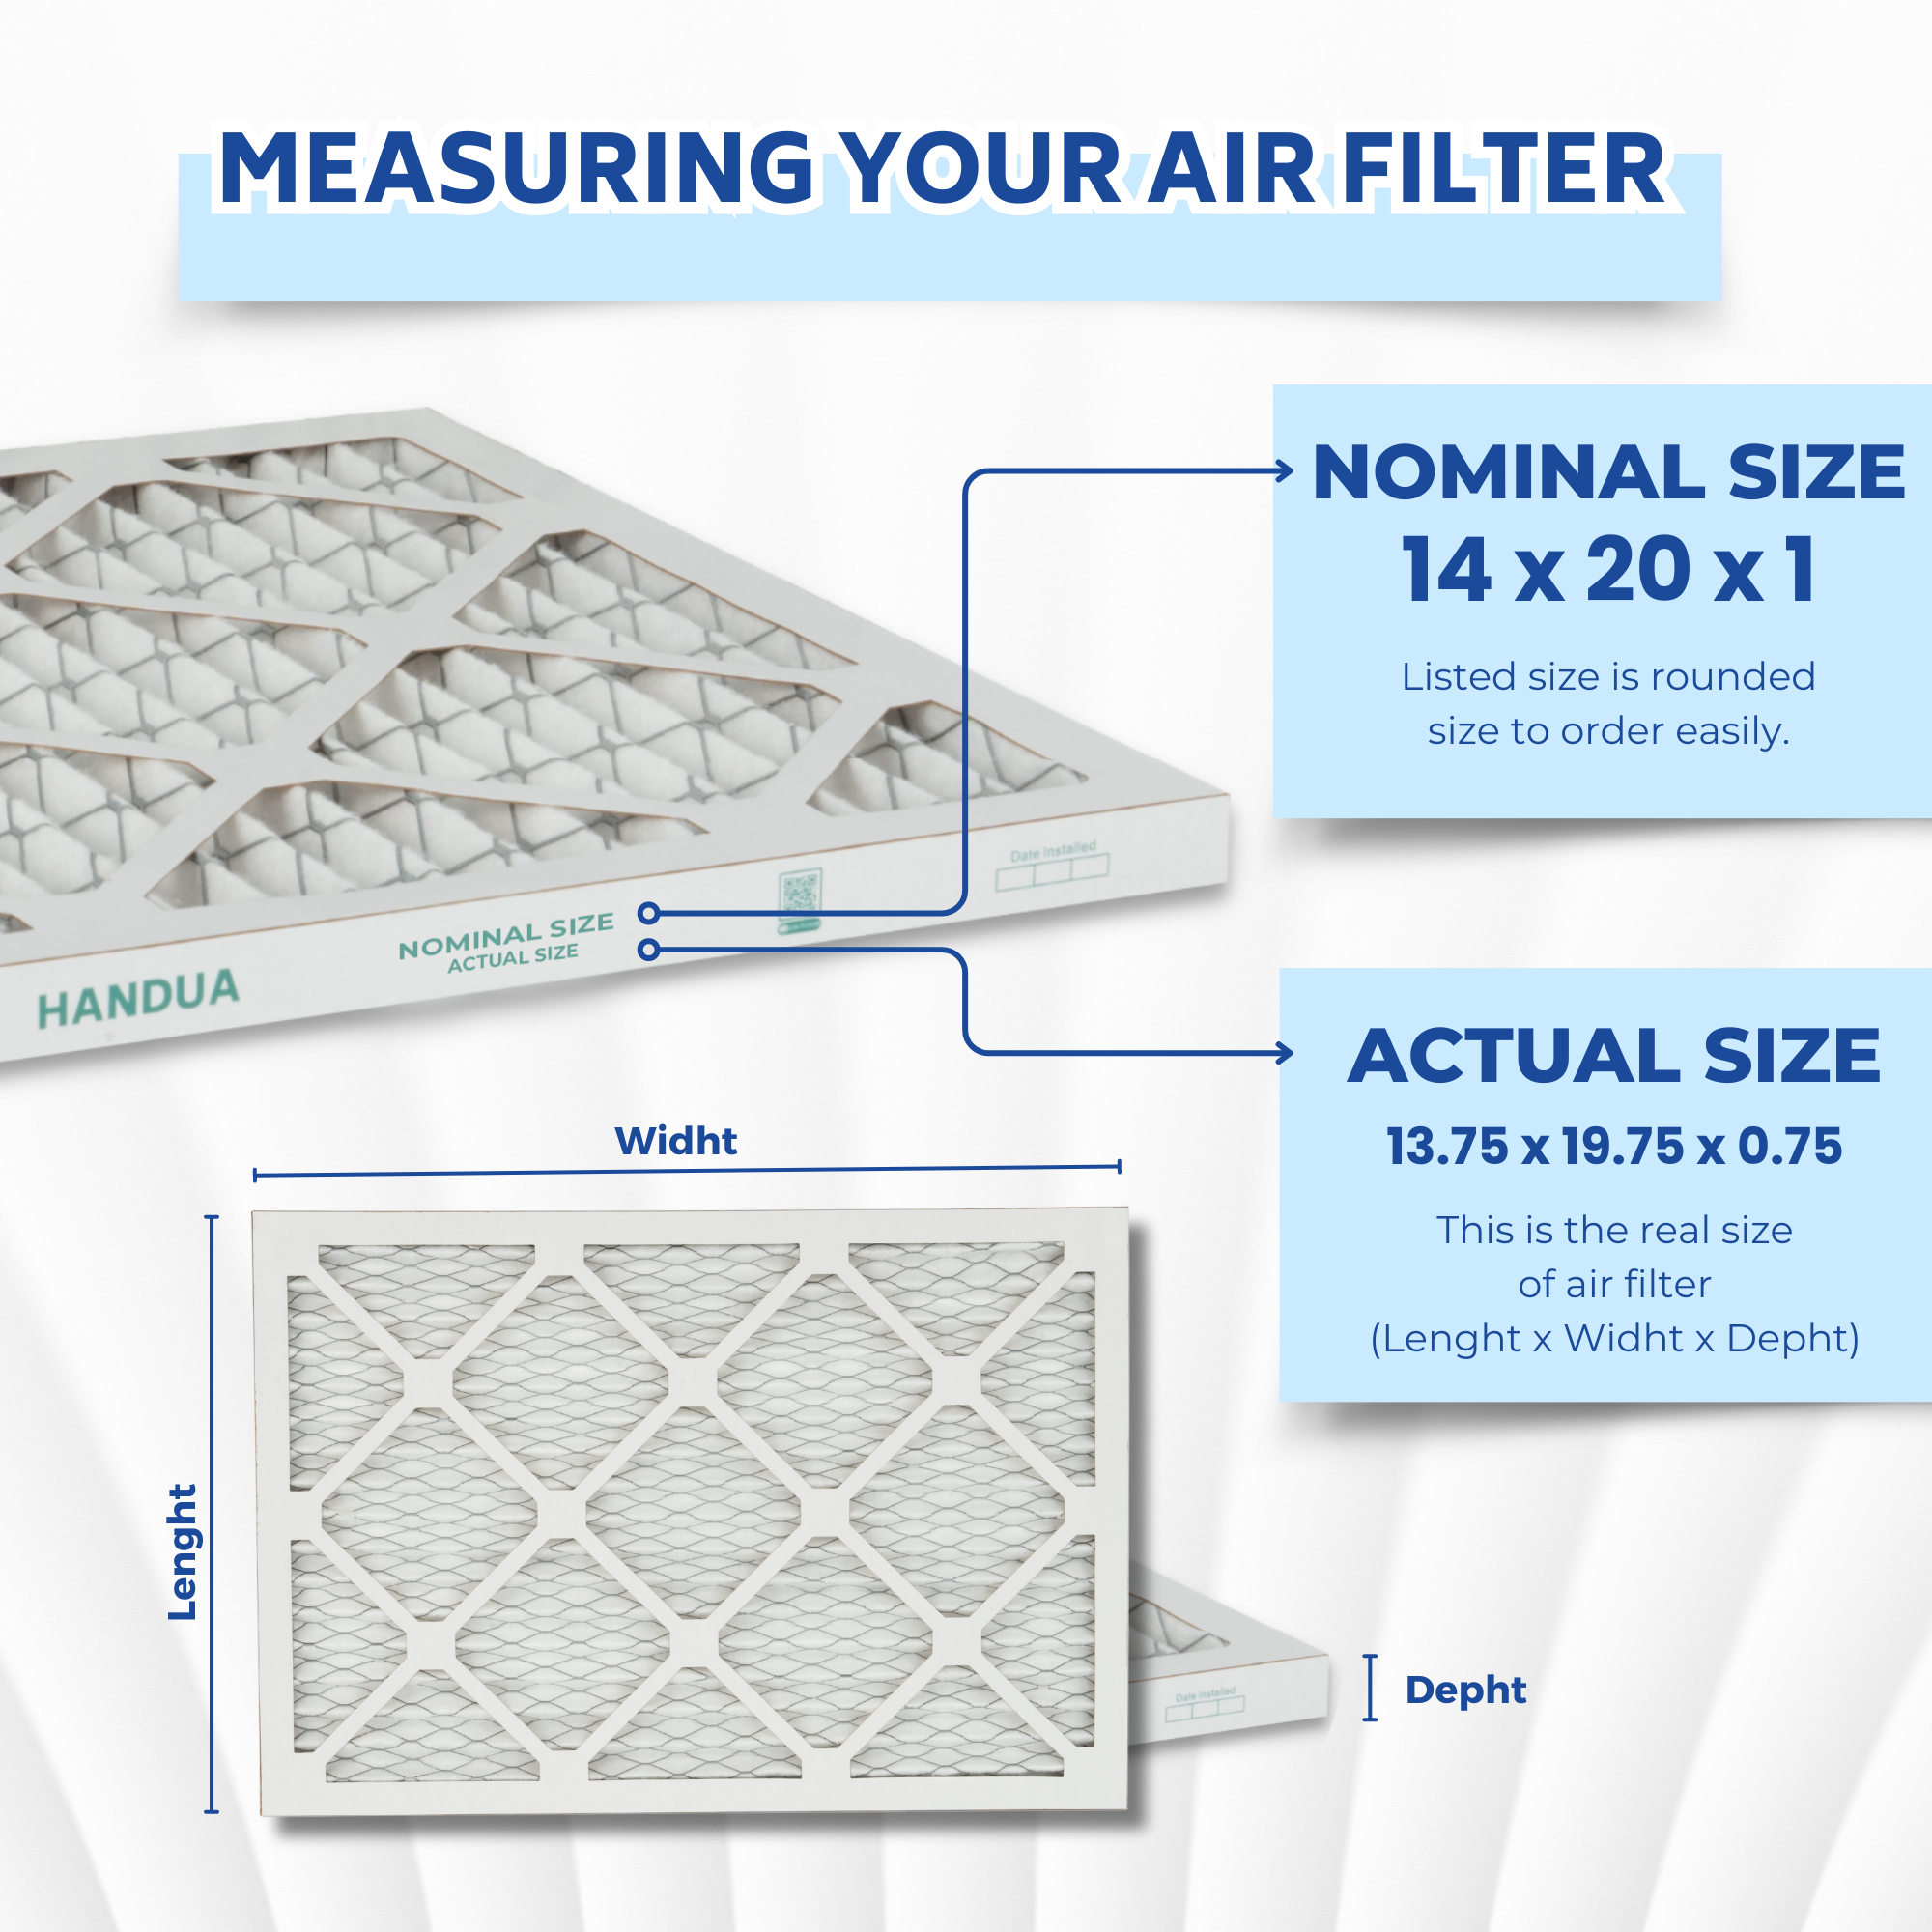 Handua 14x20x1 Air Filter MERV 11 Allergen Control, Plated Furnace AC Air Replacement Filter, 4 Pack (Actual Size: 13.75" x 19.75" x 0.75")